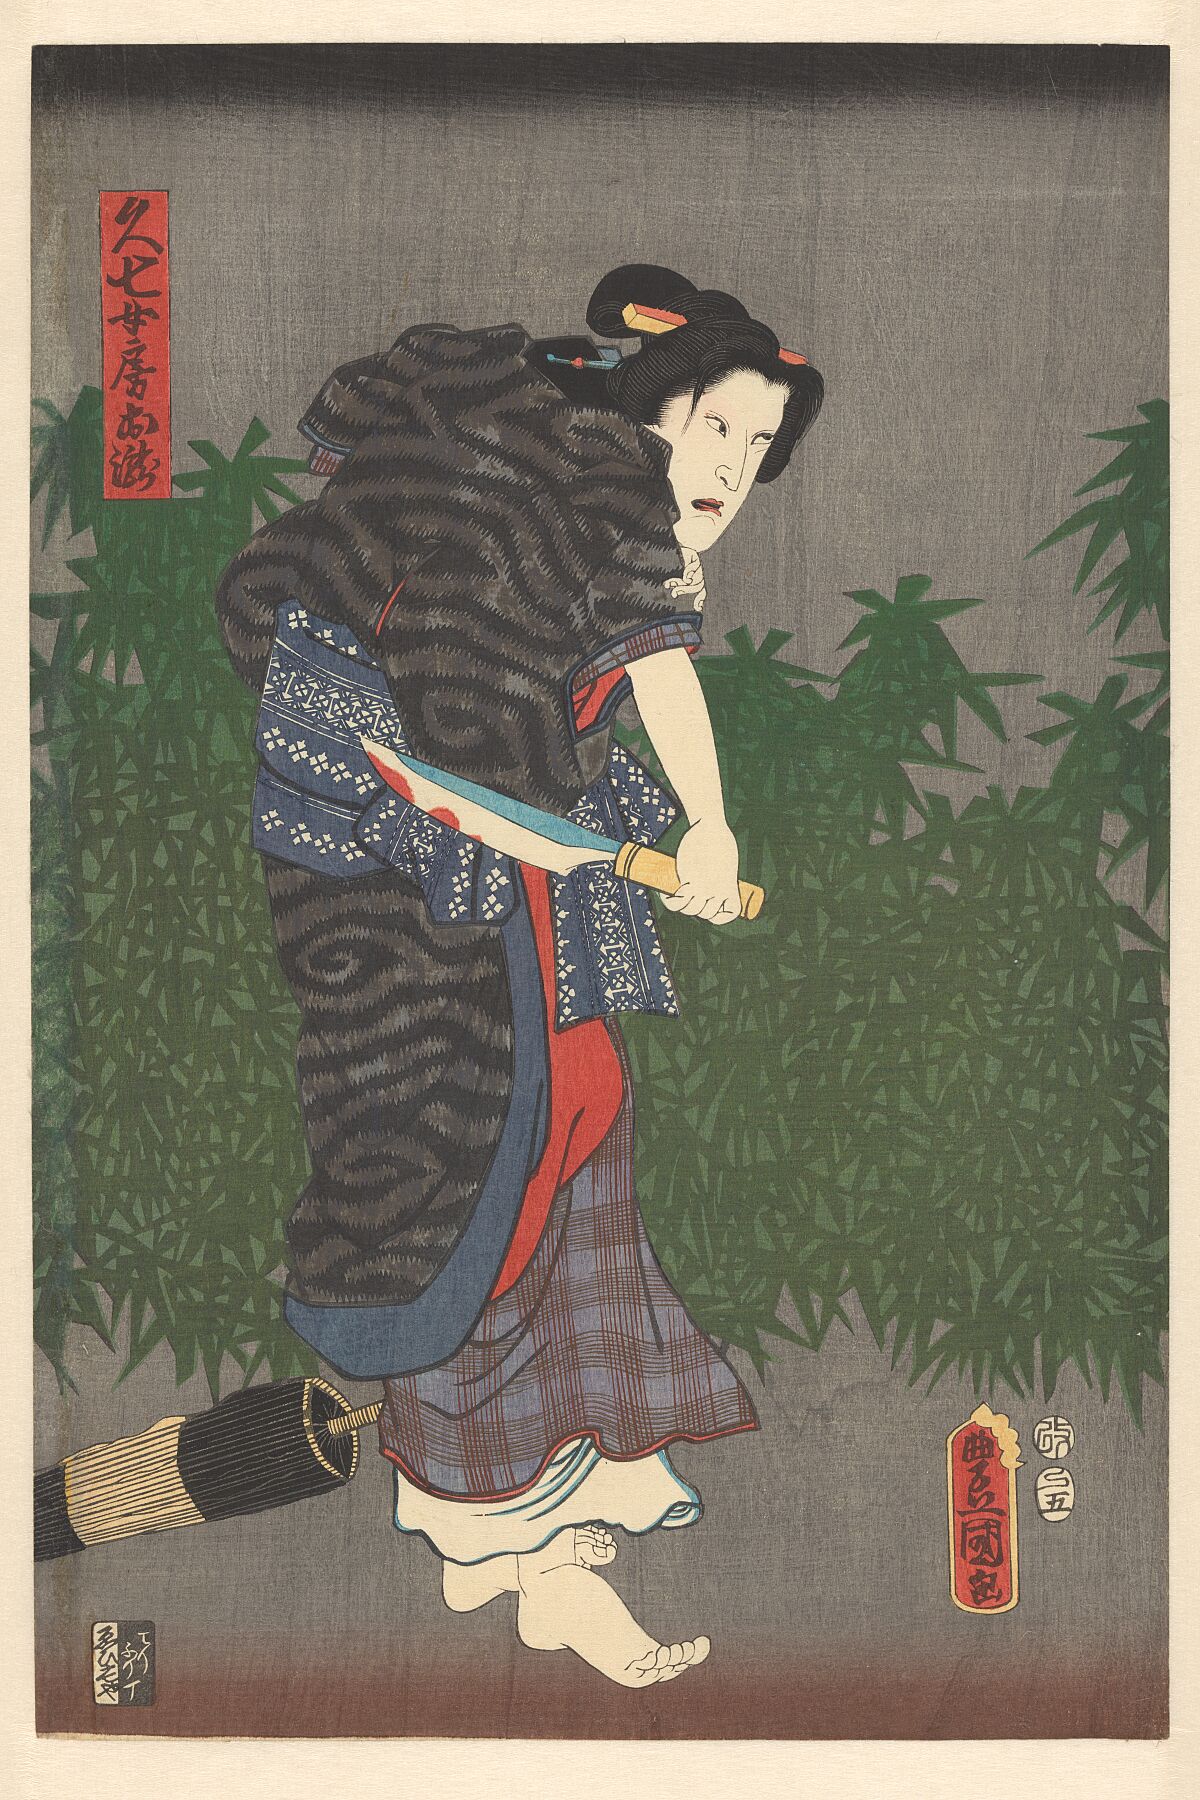 Otaki with a Bloodied knife in her Hands by Utyagwa Kunisada - 1857